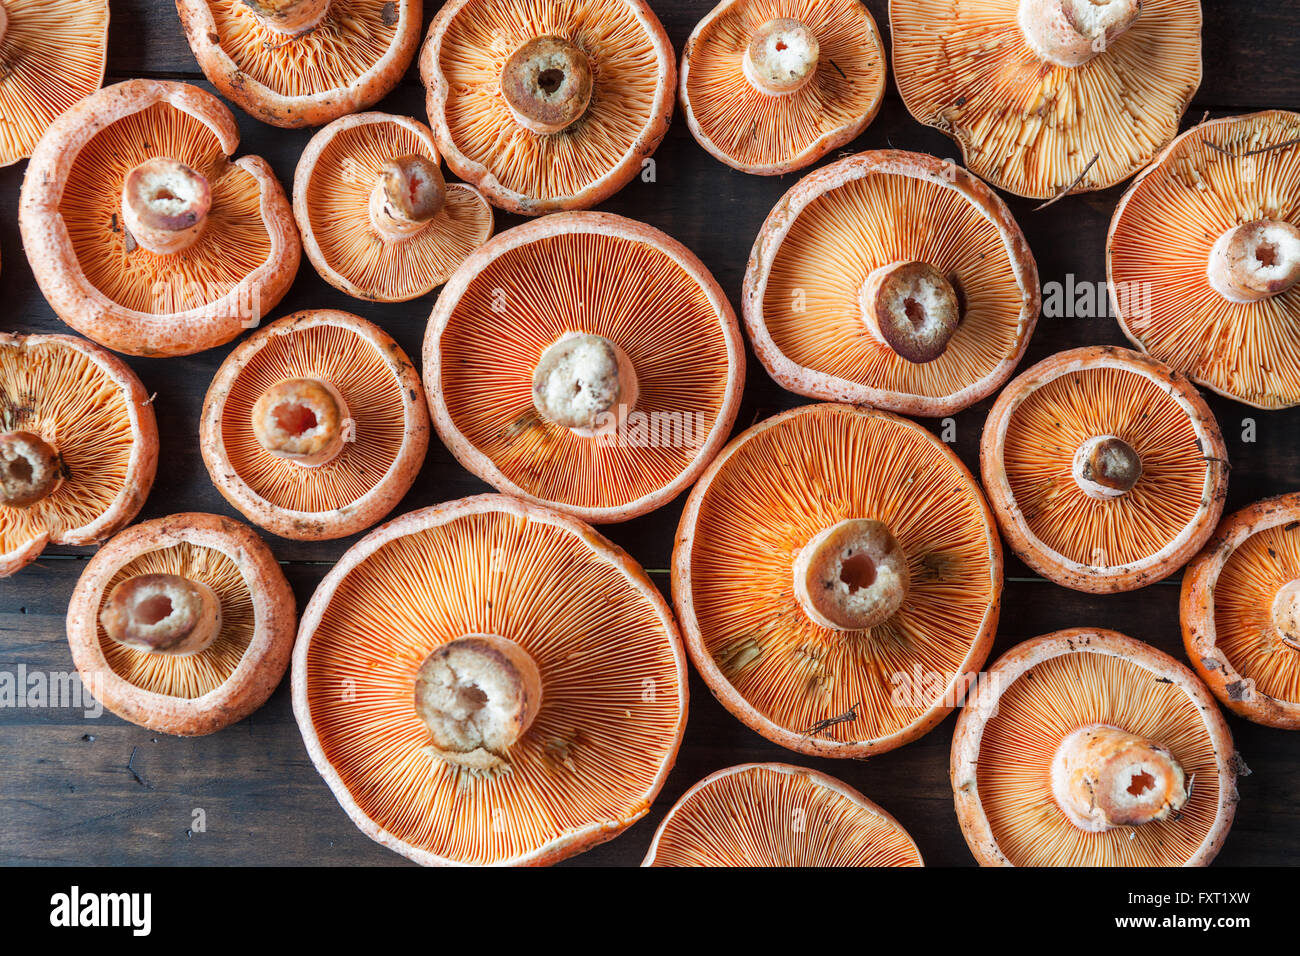 Orange edible mushrooms - Saffron Milk Cap on rustic brown wooden table. Top view. Stock Photo